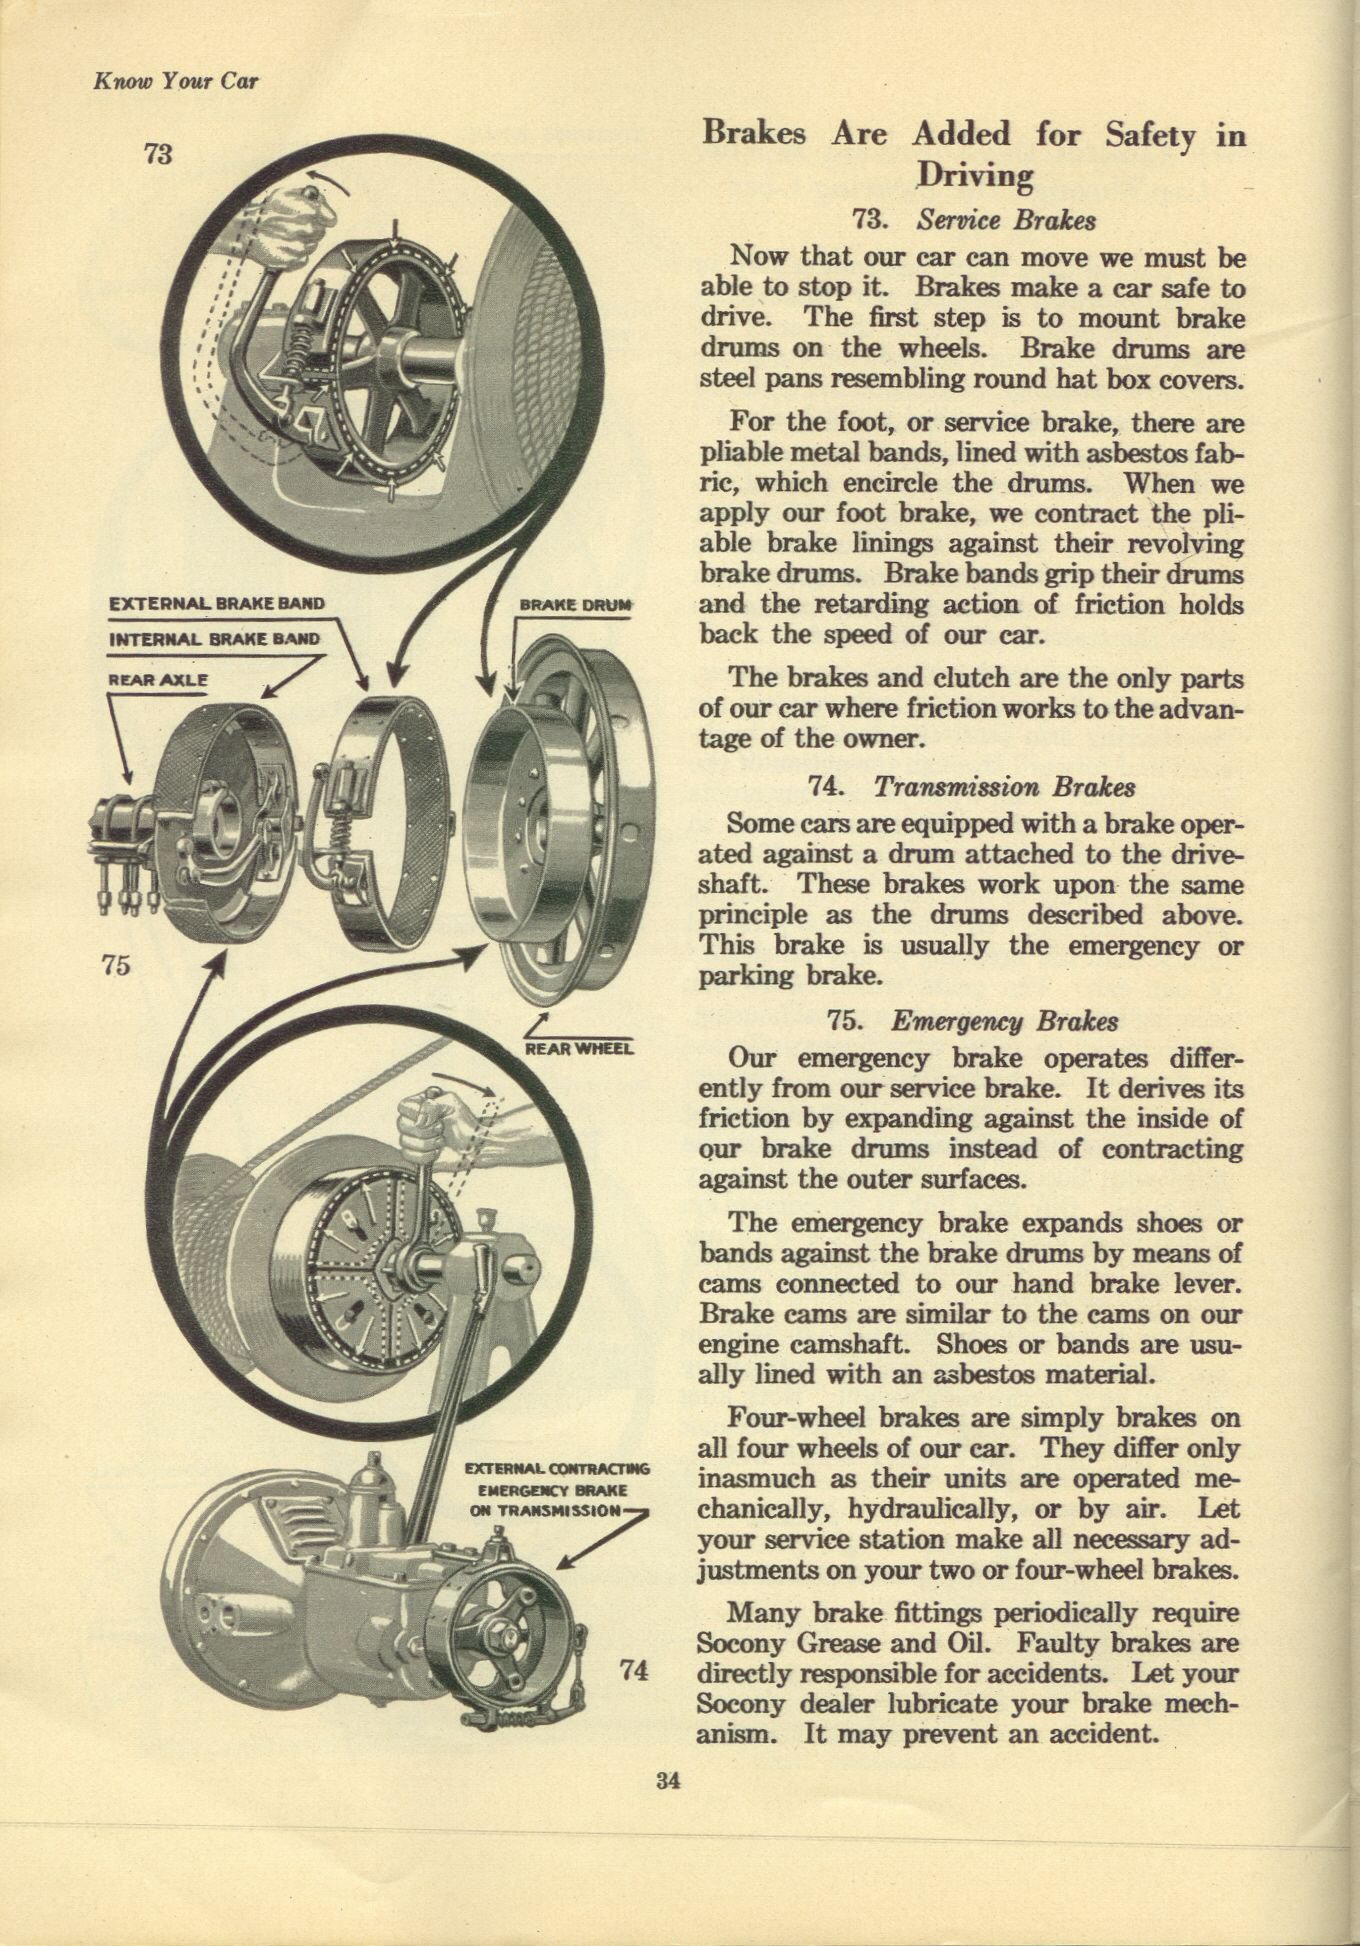 1928 Know Your Car Handbook Page 6